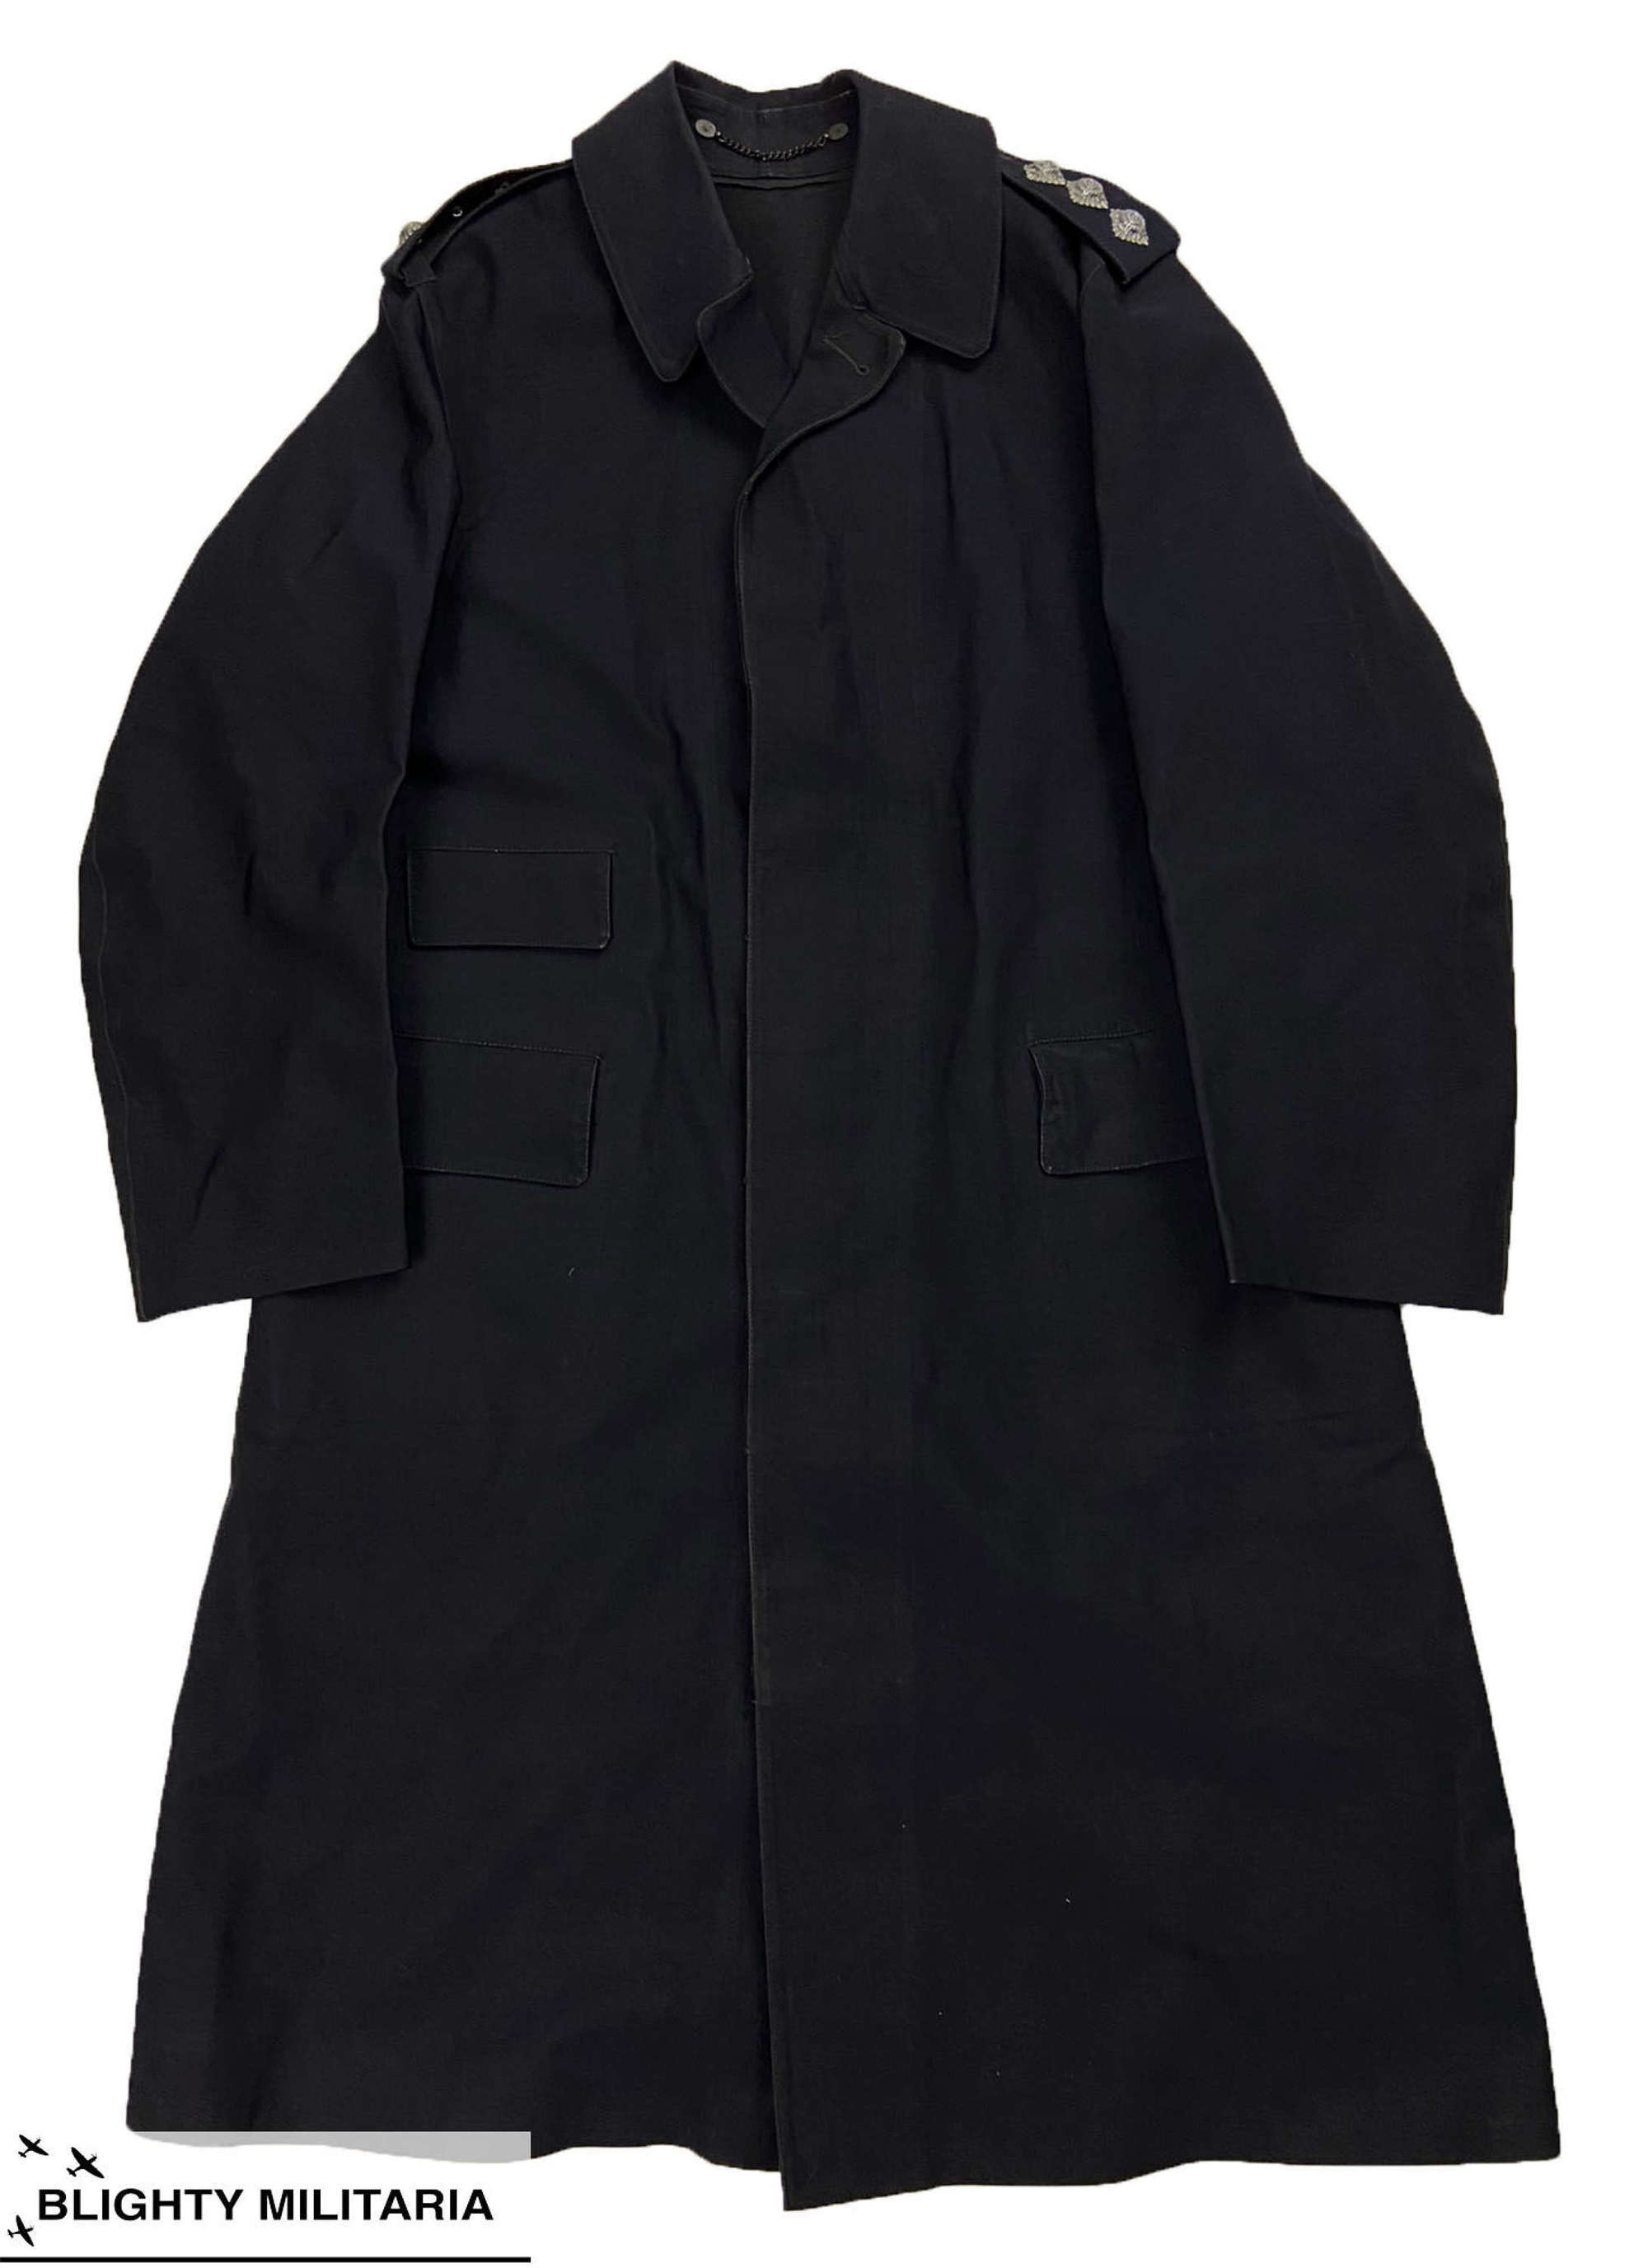 Original 1940s British Police Chief Inspector's Macintosh Raintcoat